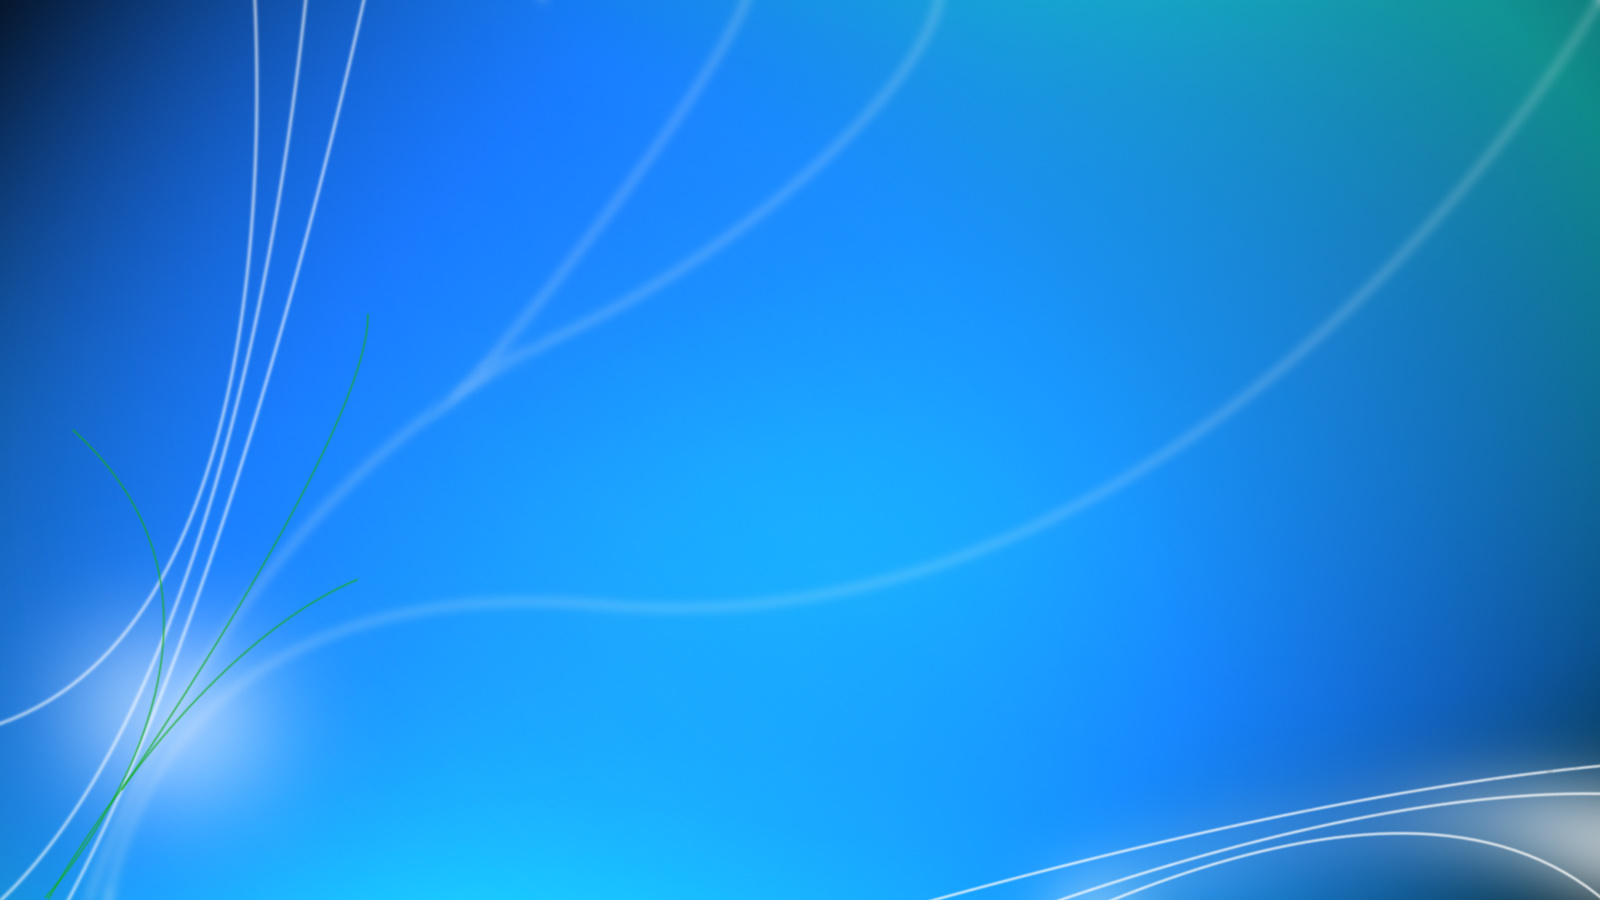 Windows 7 New Logon Background by AnonDepressive on DeviantArt